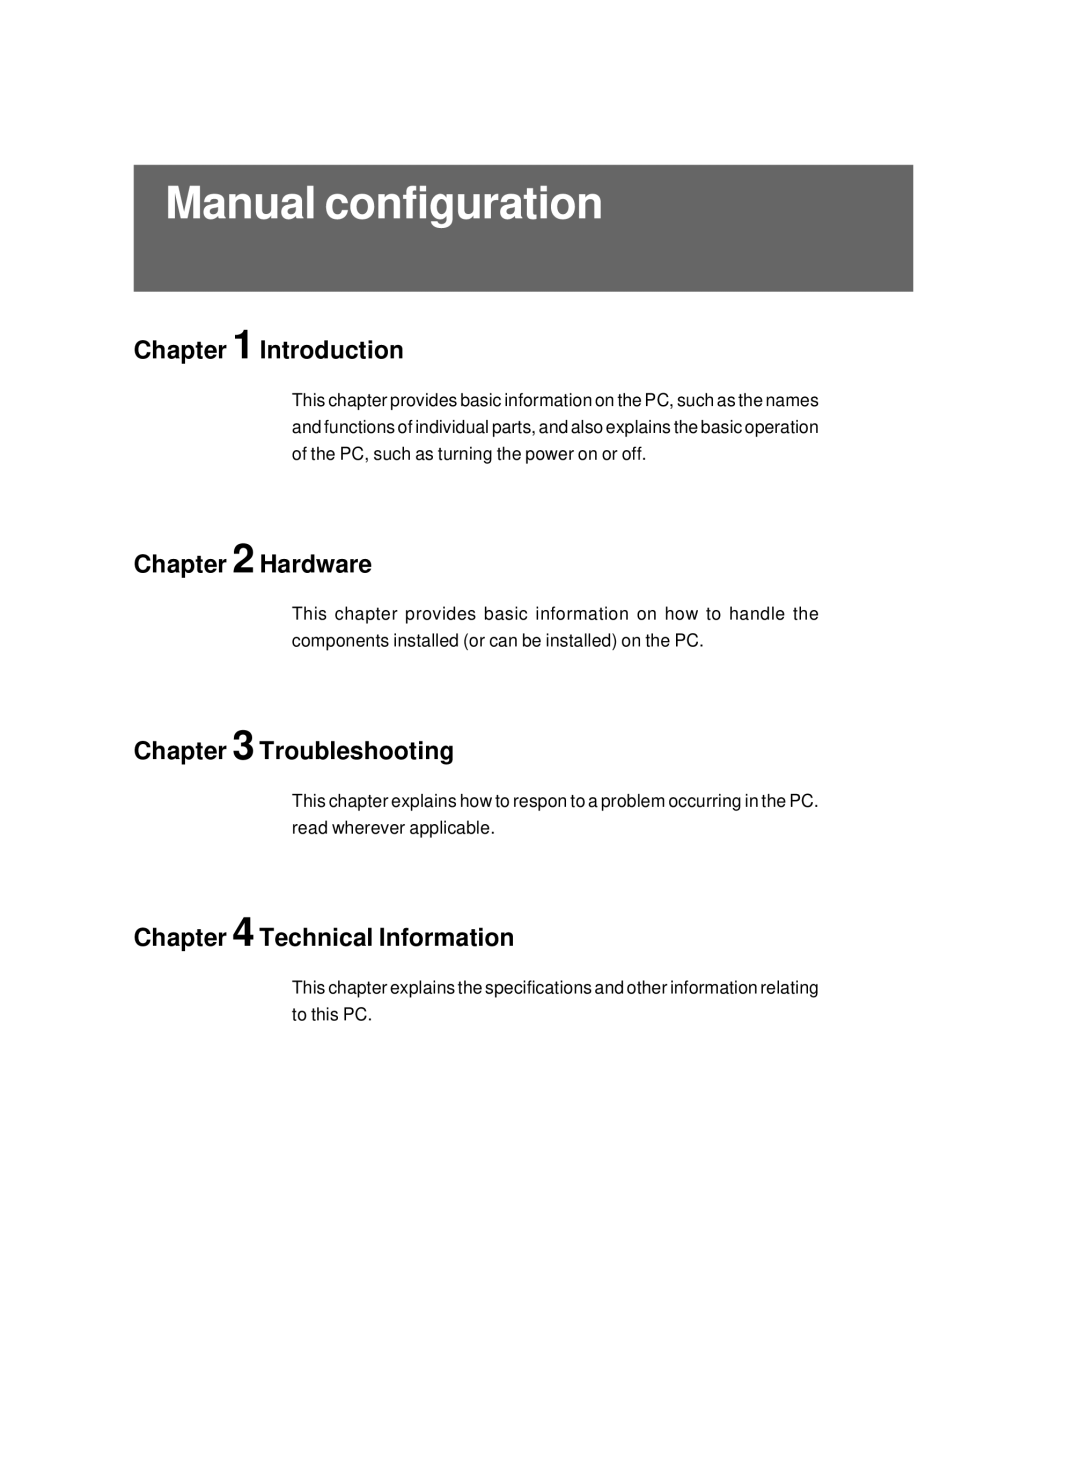 Fujitsu 8000 SERIES user manual Manual configuration, Introduction 